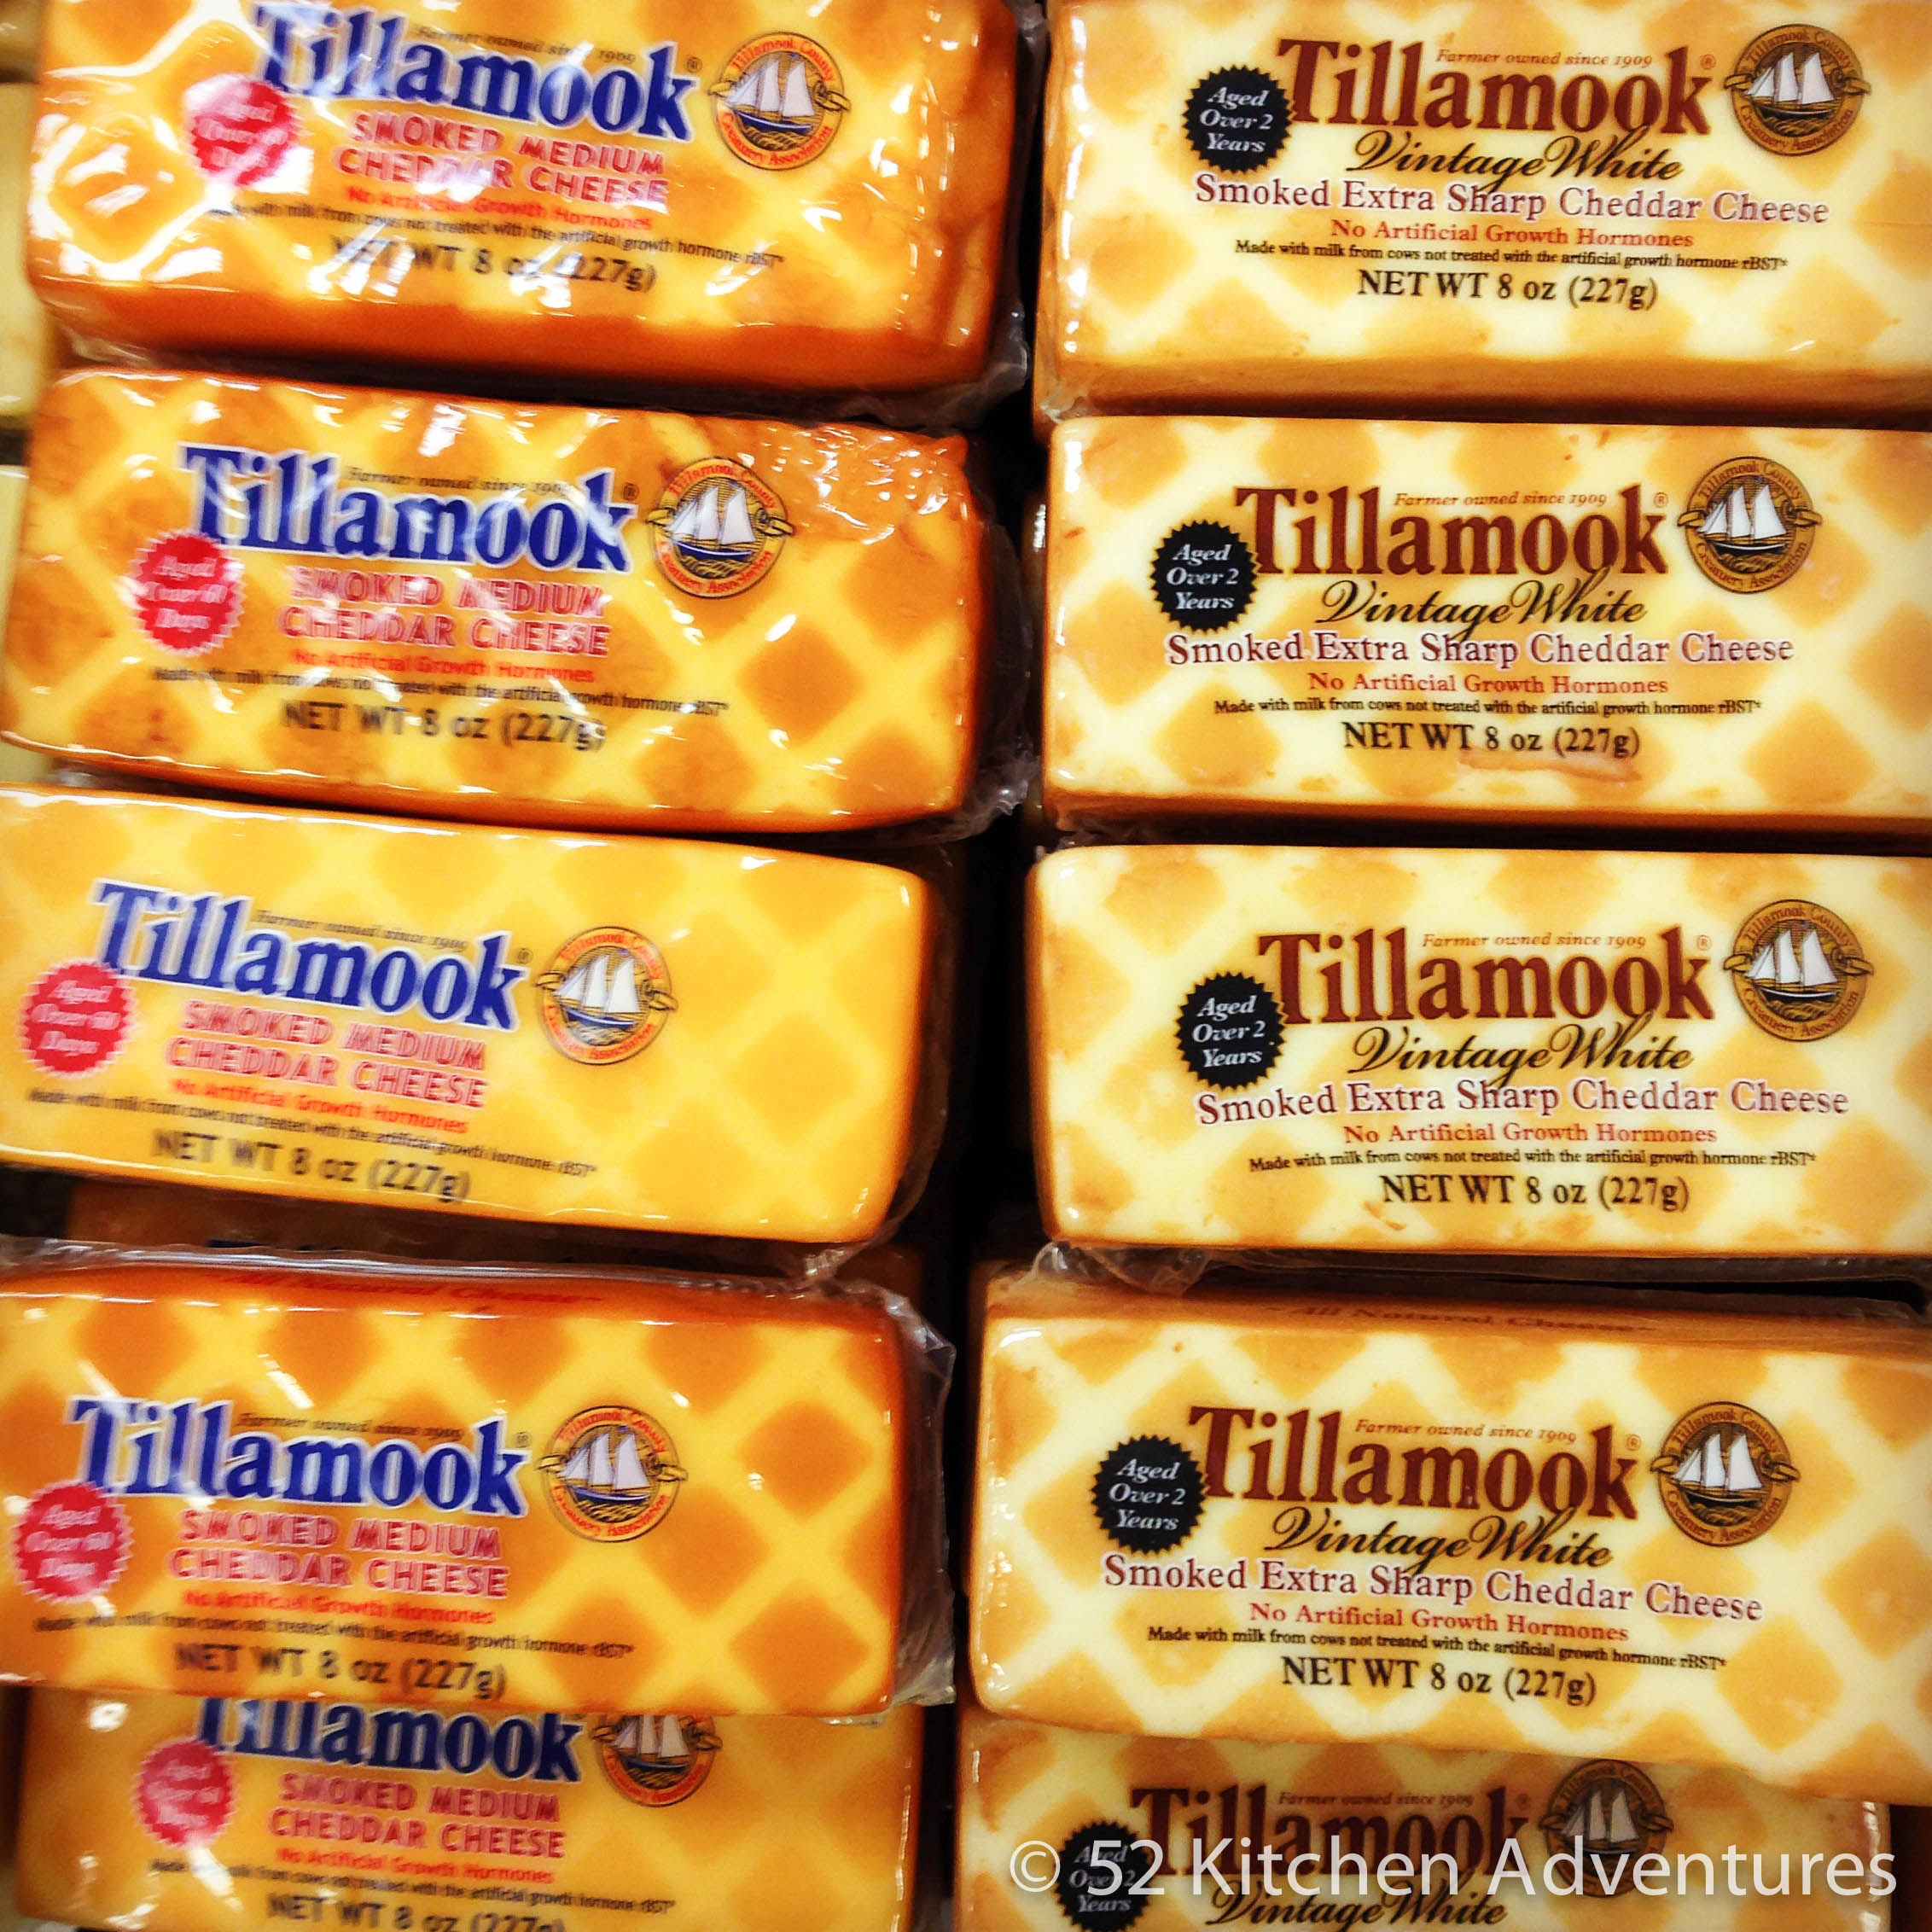 Tillamook cheese